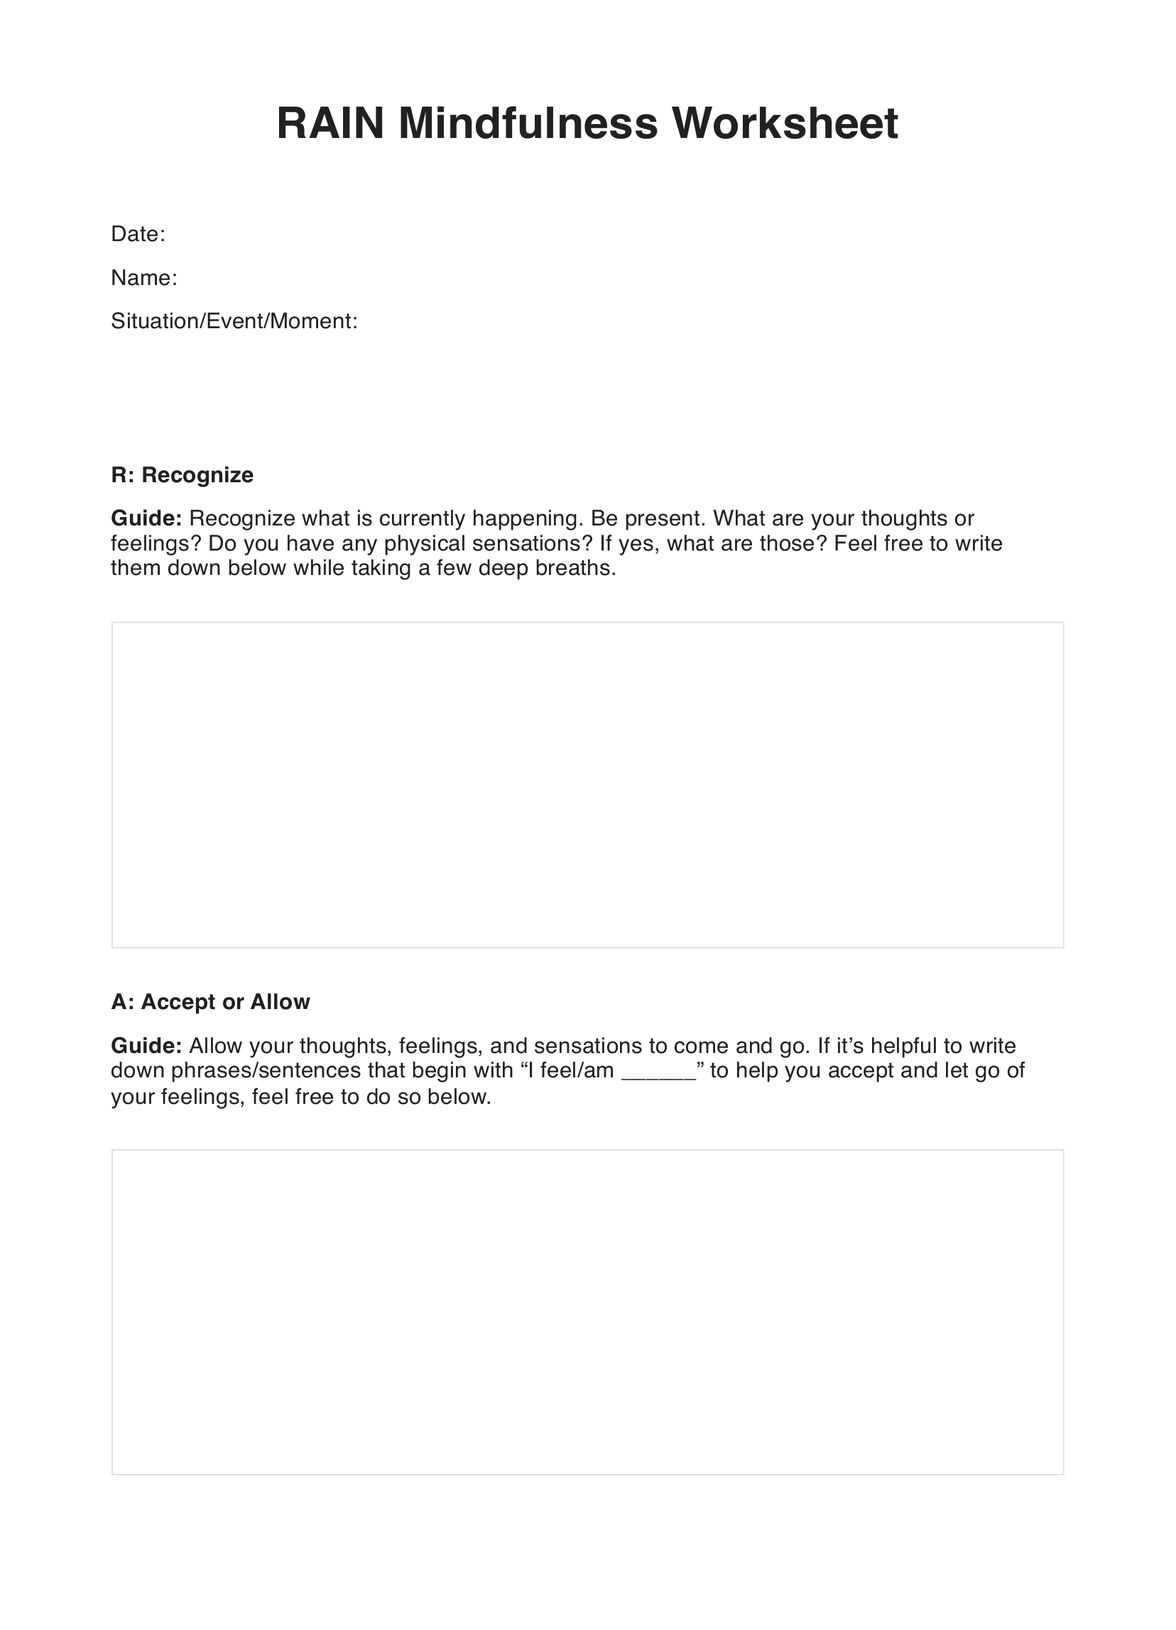 Rain Mindfulness Worksheet PDF Example